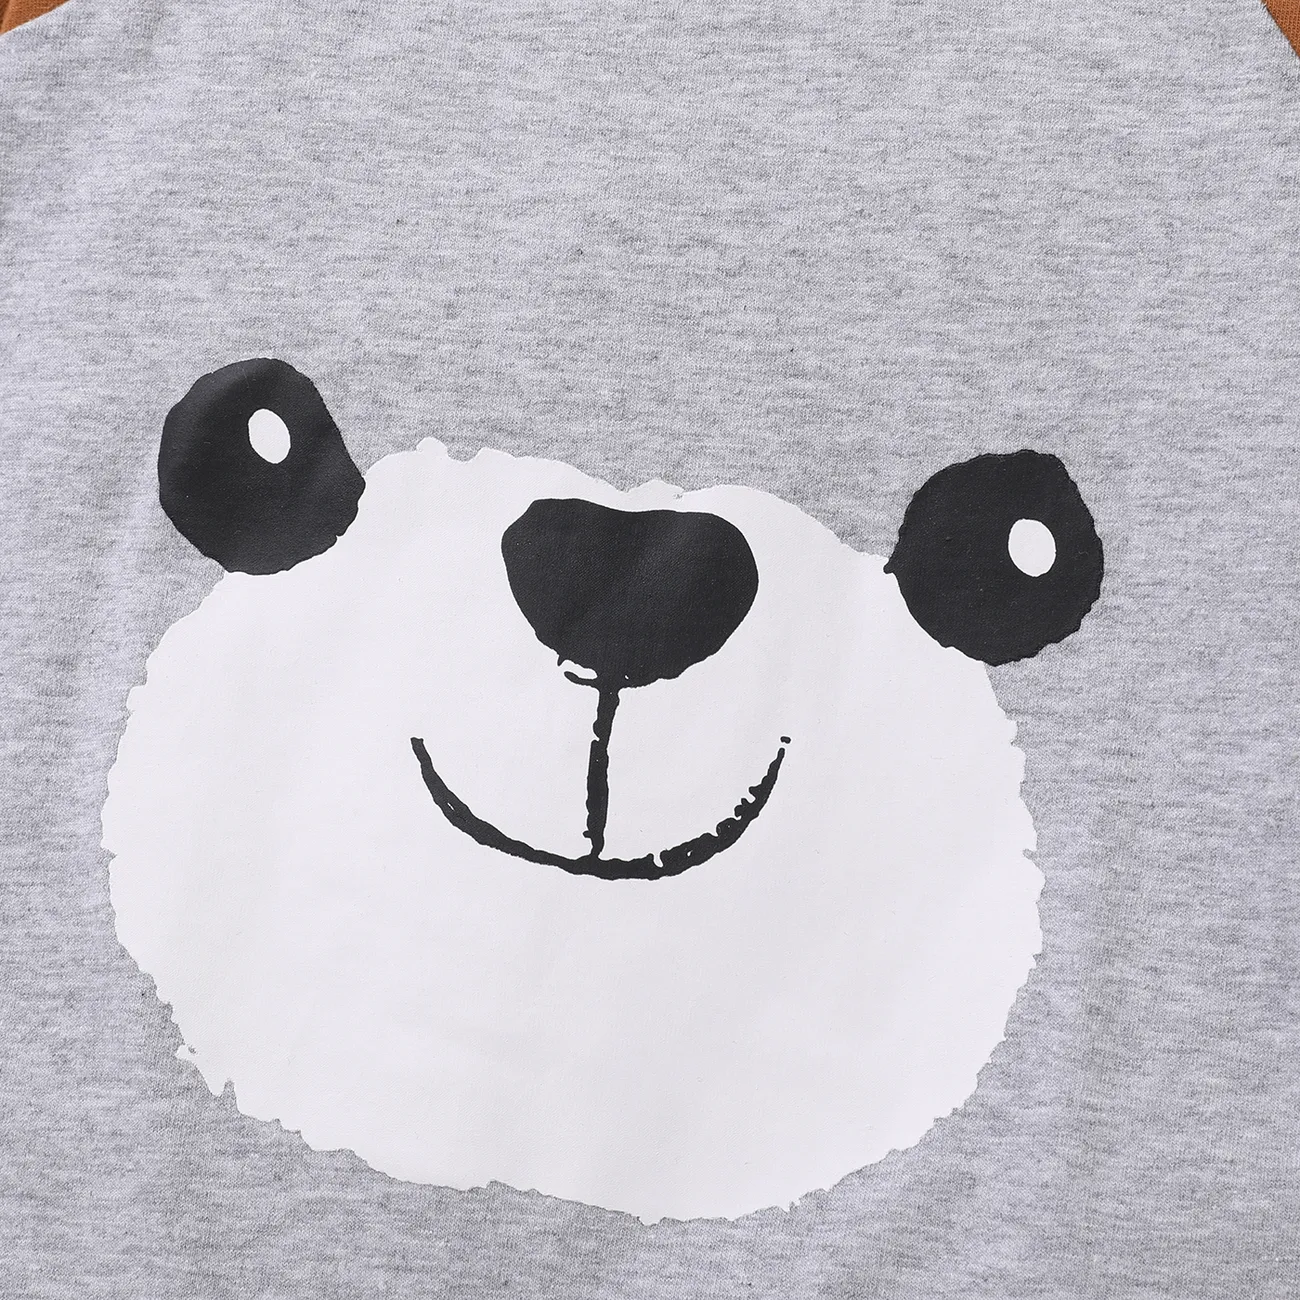 2pcs Baby Boy 95% Cotton Long-sleeve Faux-two Cartoon Panda Jumpsuit with Hat Set Brown big image 1